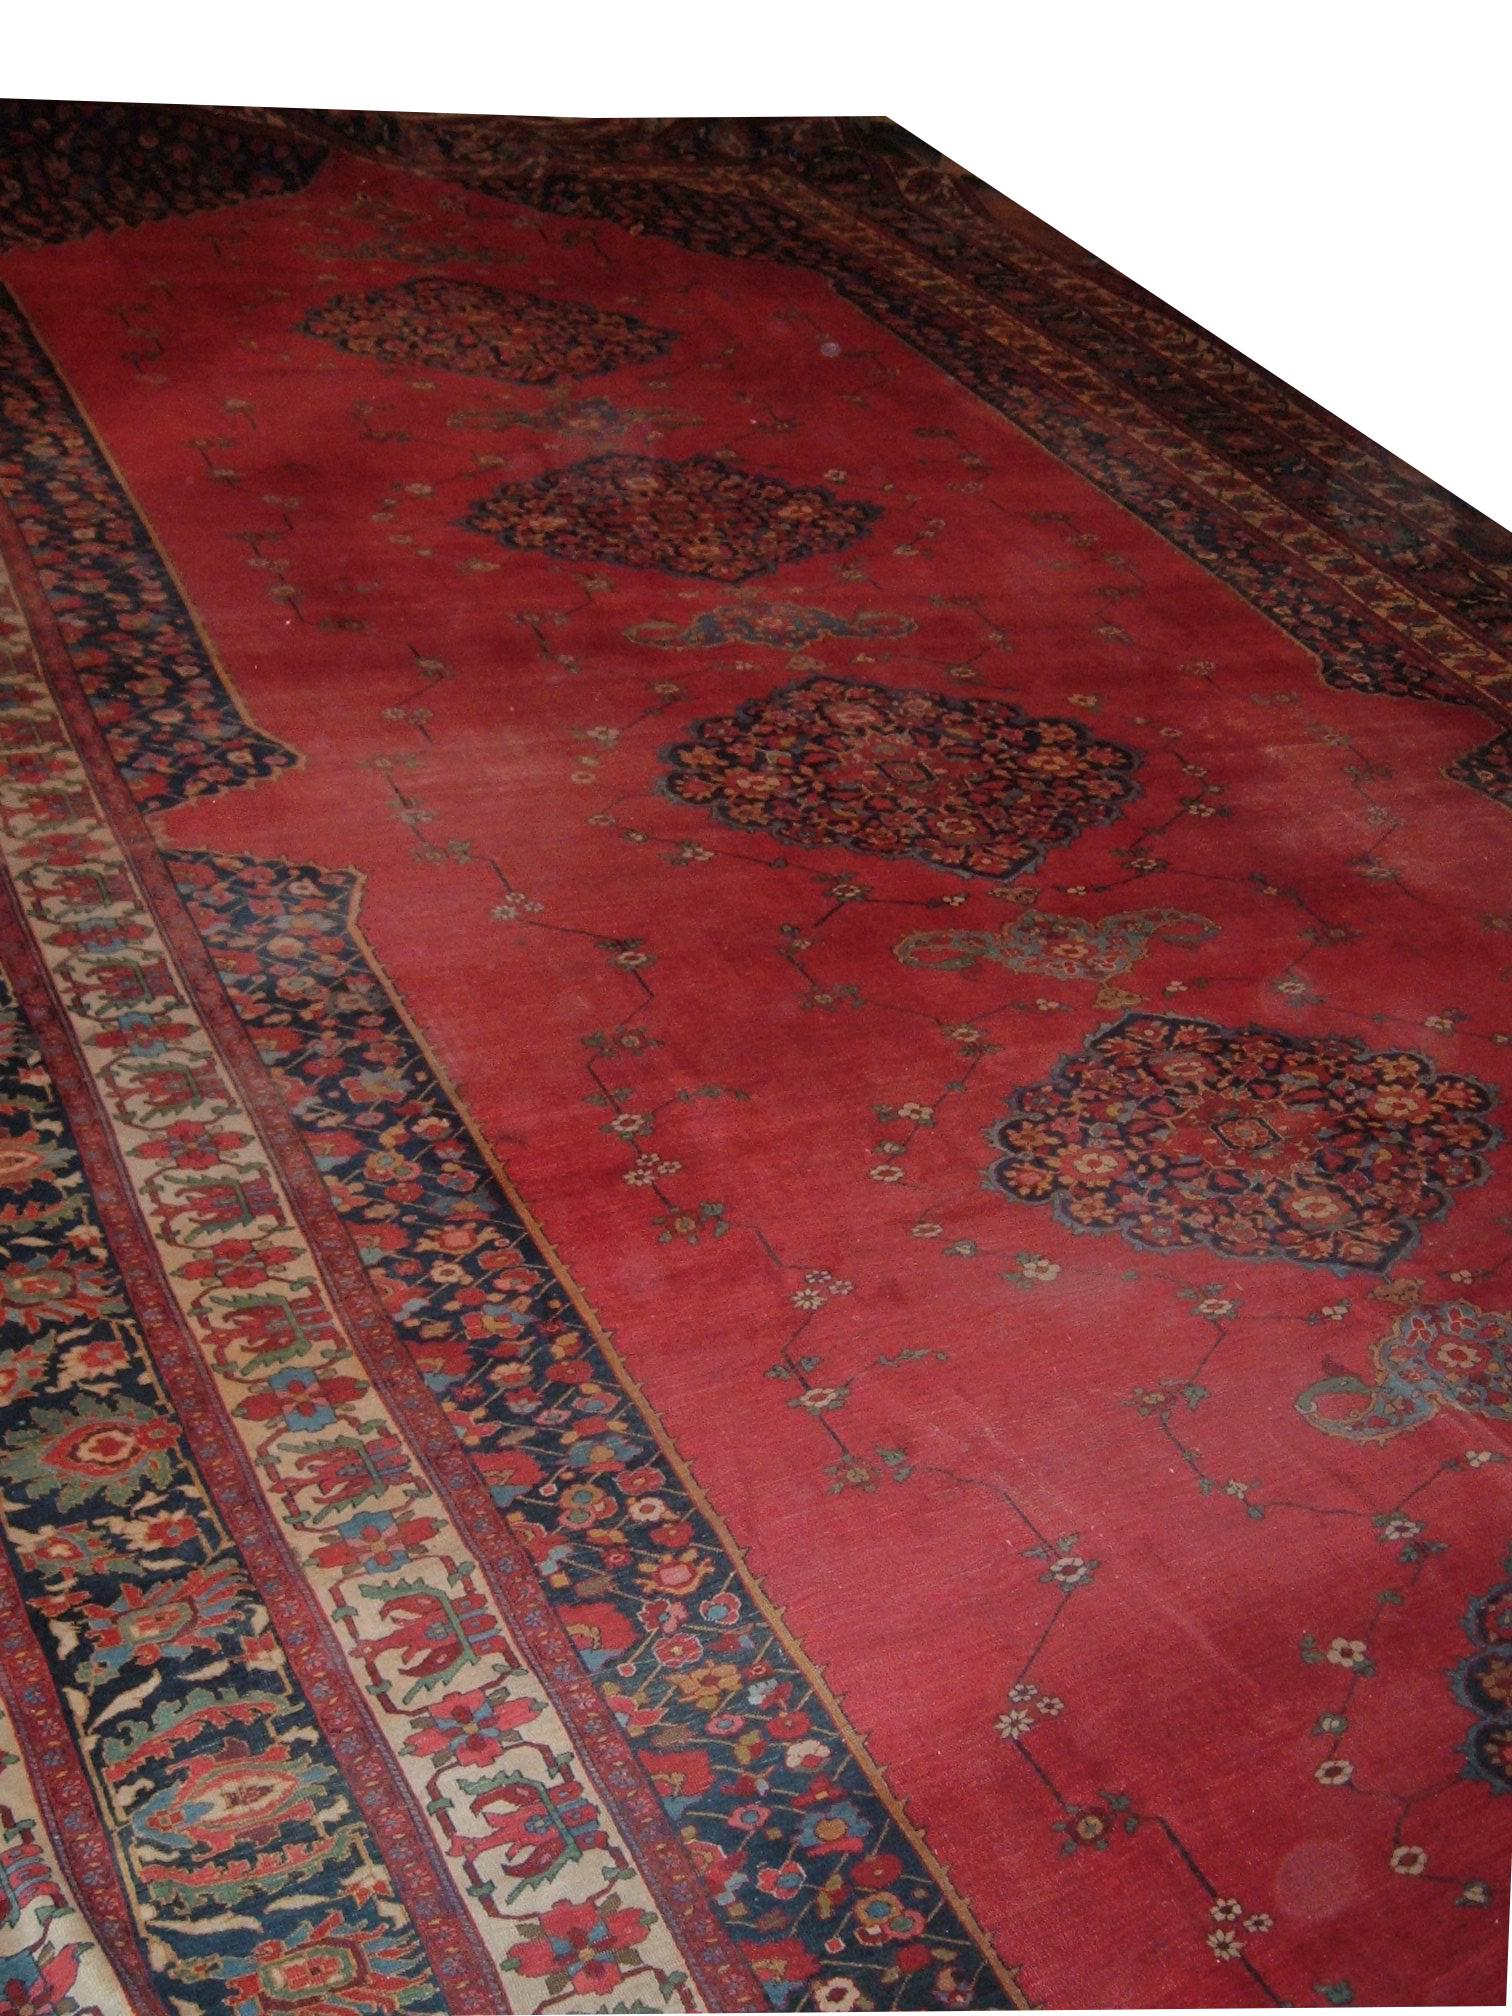 Wool Antique Farahan Sarouk Carpet, Handmade Oriental Rug, Ivory, Navy, Red For Sale